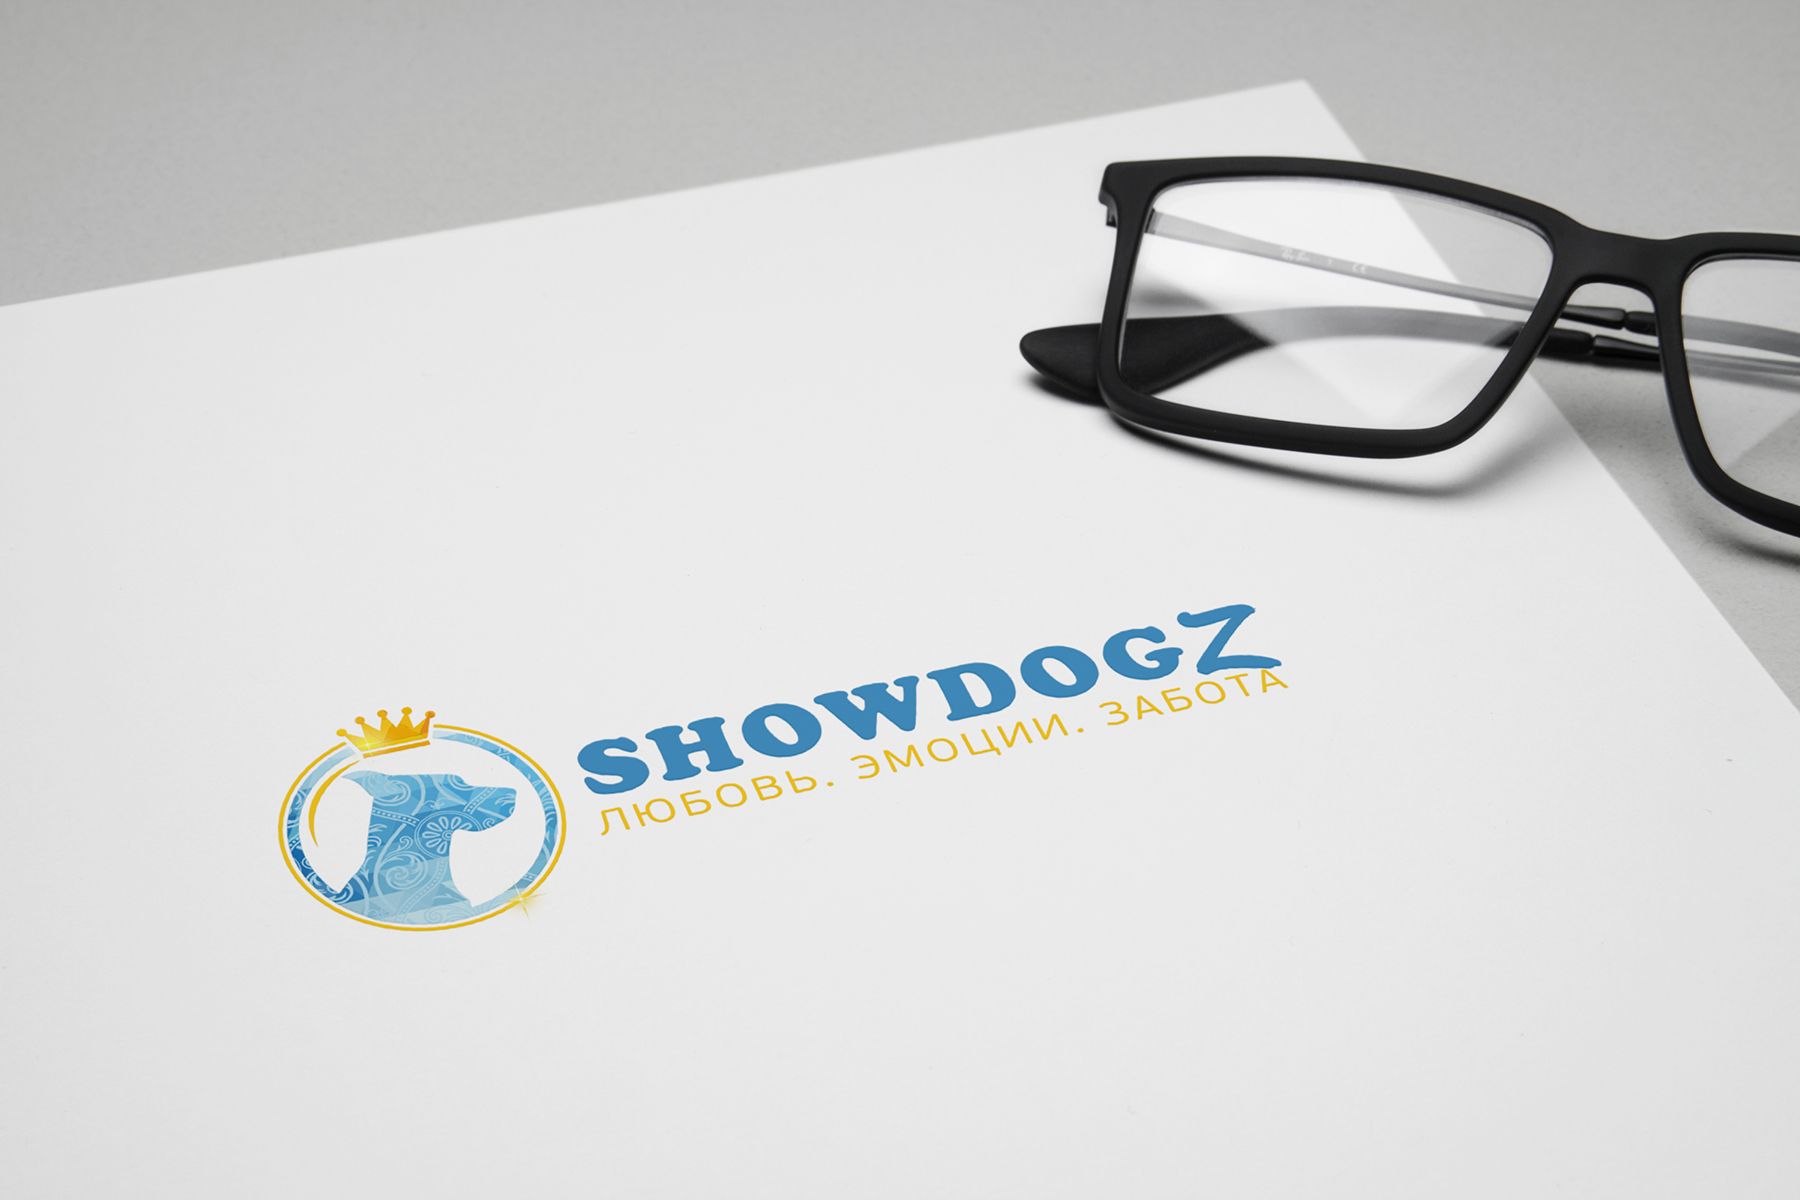 Логотип для showdogz - дизайнер funkielevis